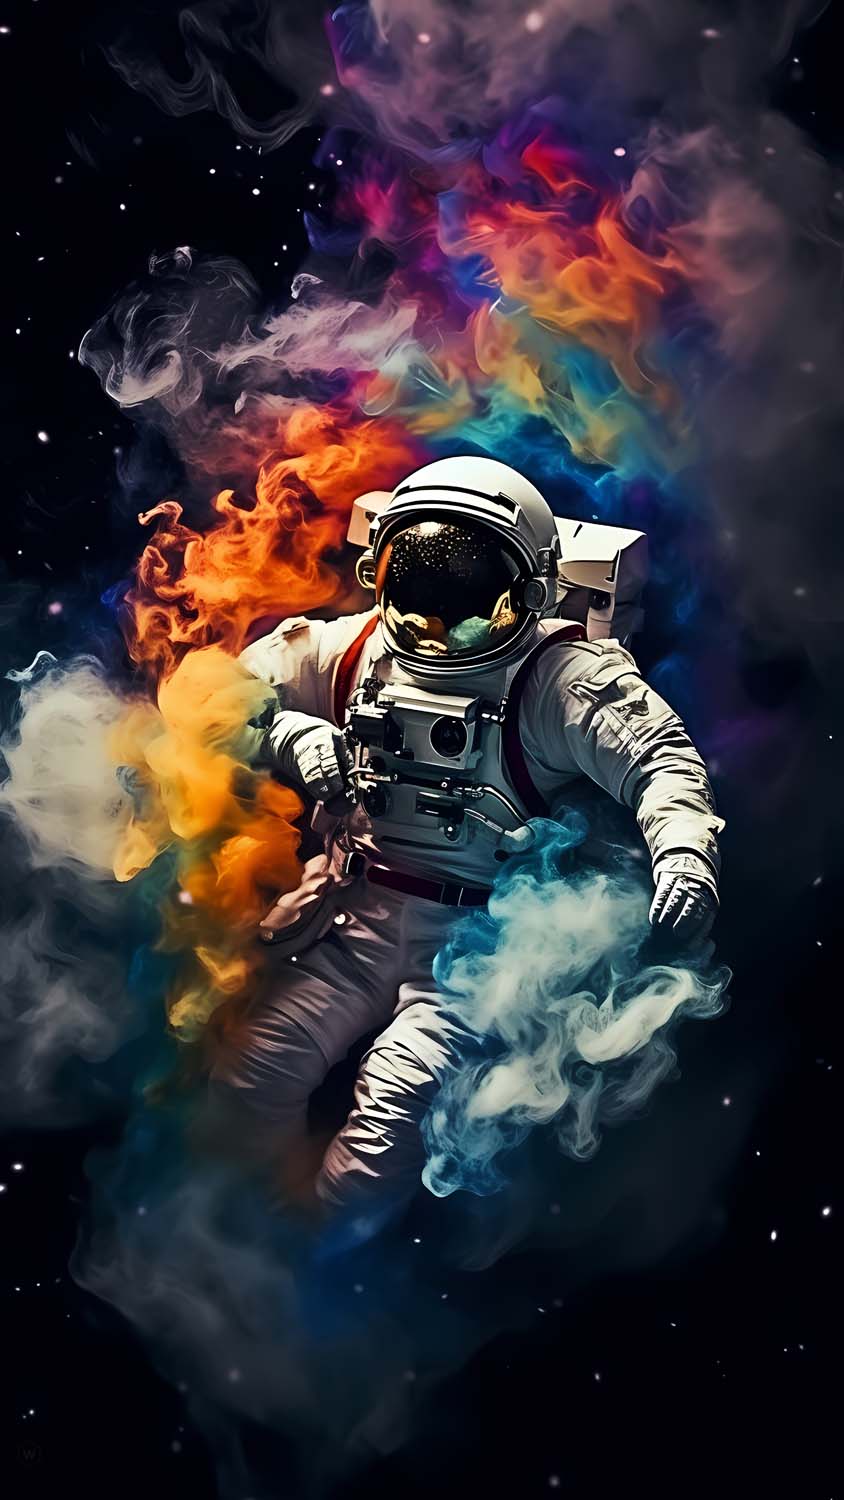 Astronaut Lost in Cosmic Smoke iPhone Wallpaper HD